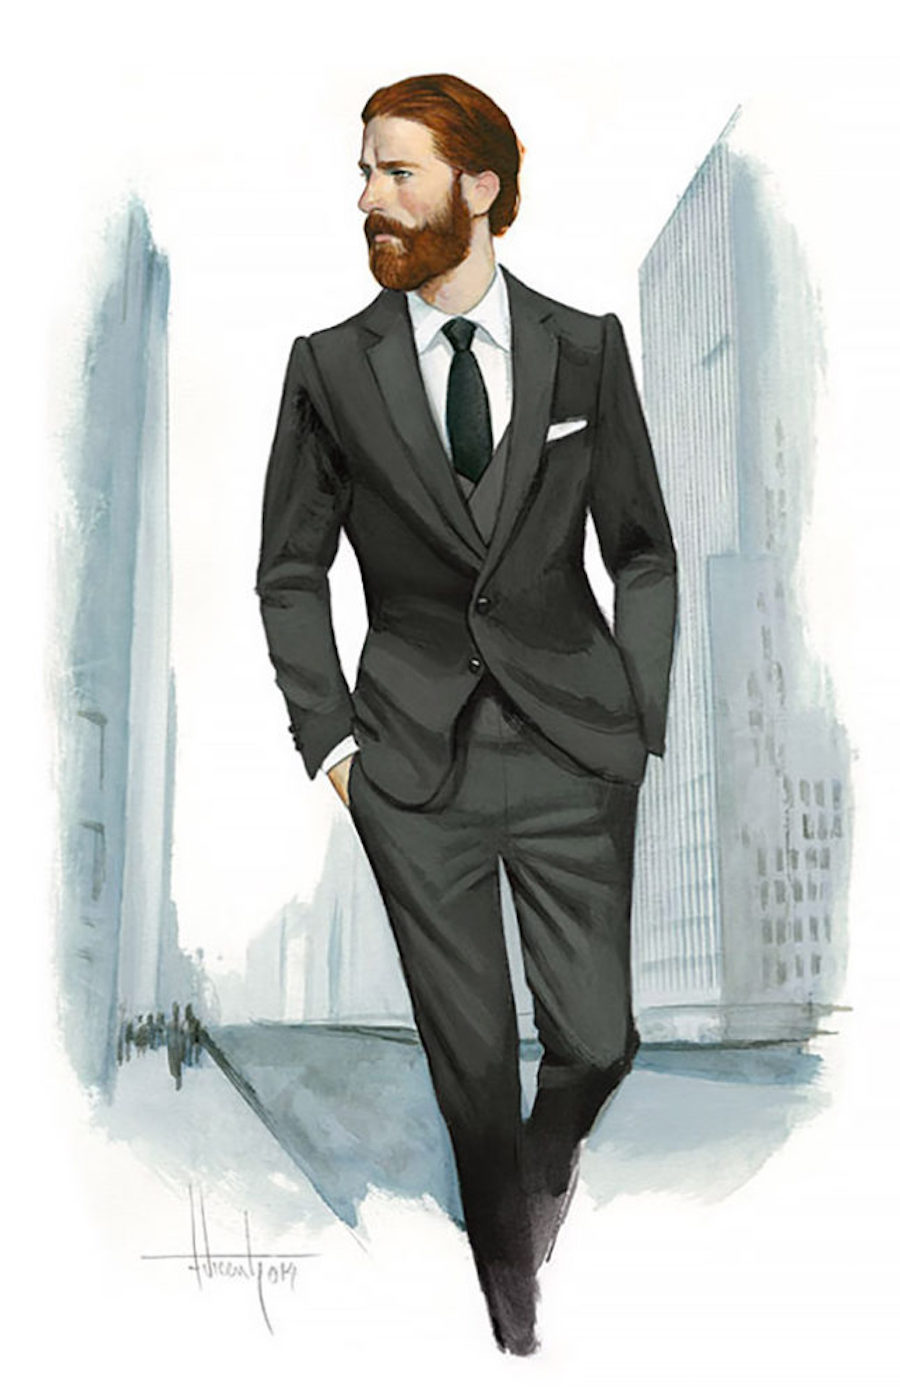 Illustrations of Gentlemen's Fashion by Fernando Vicente8